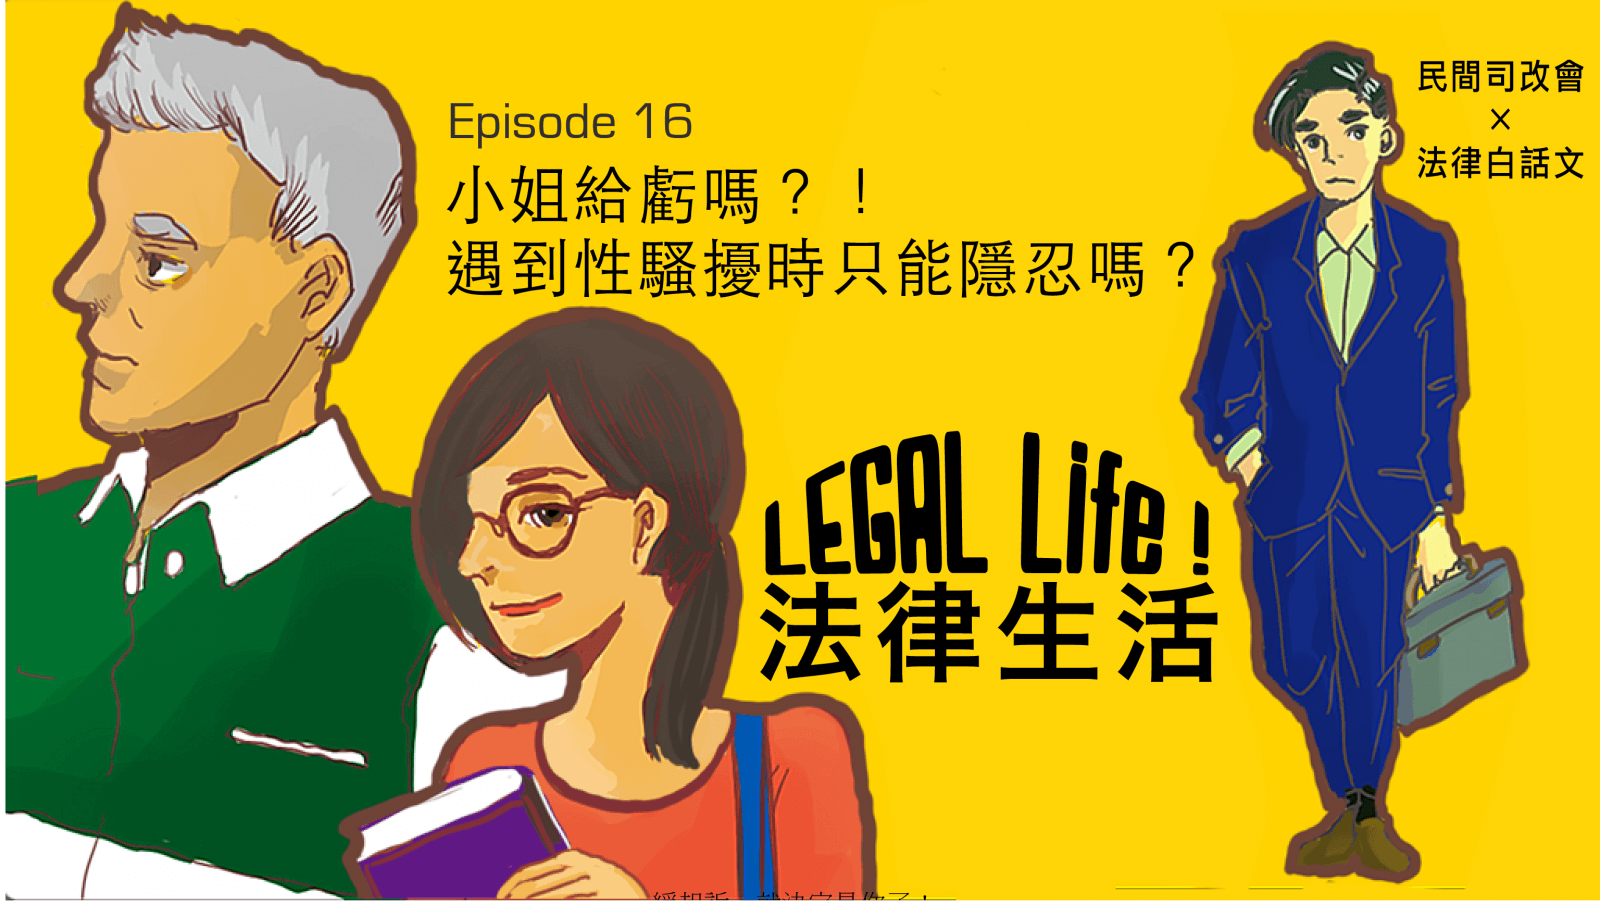 2016/09/legal-life-16.png